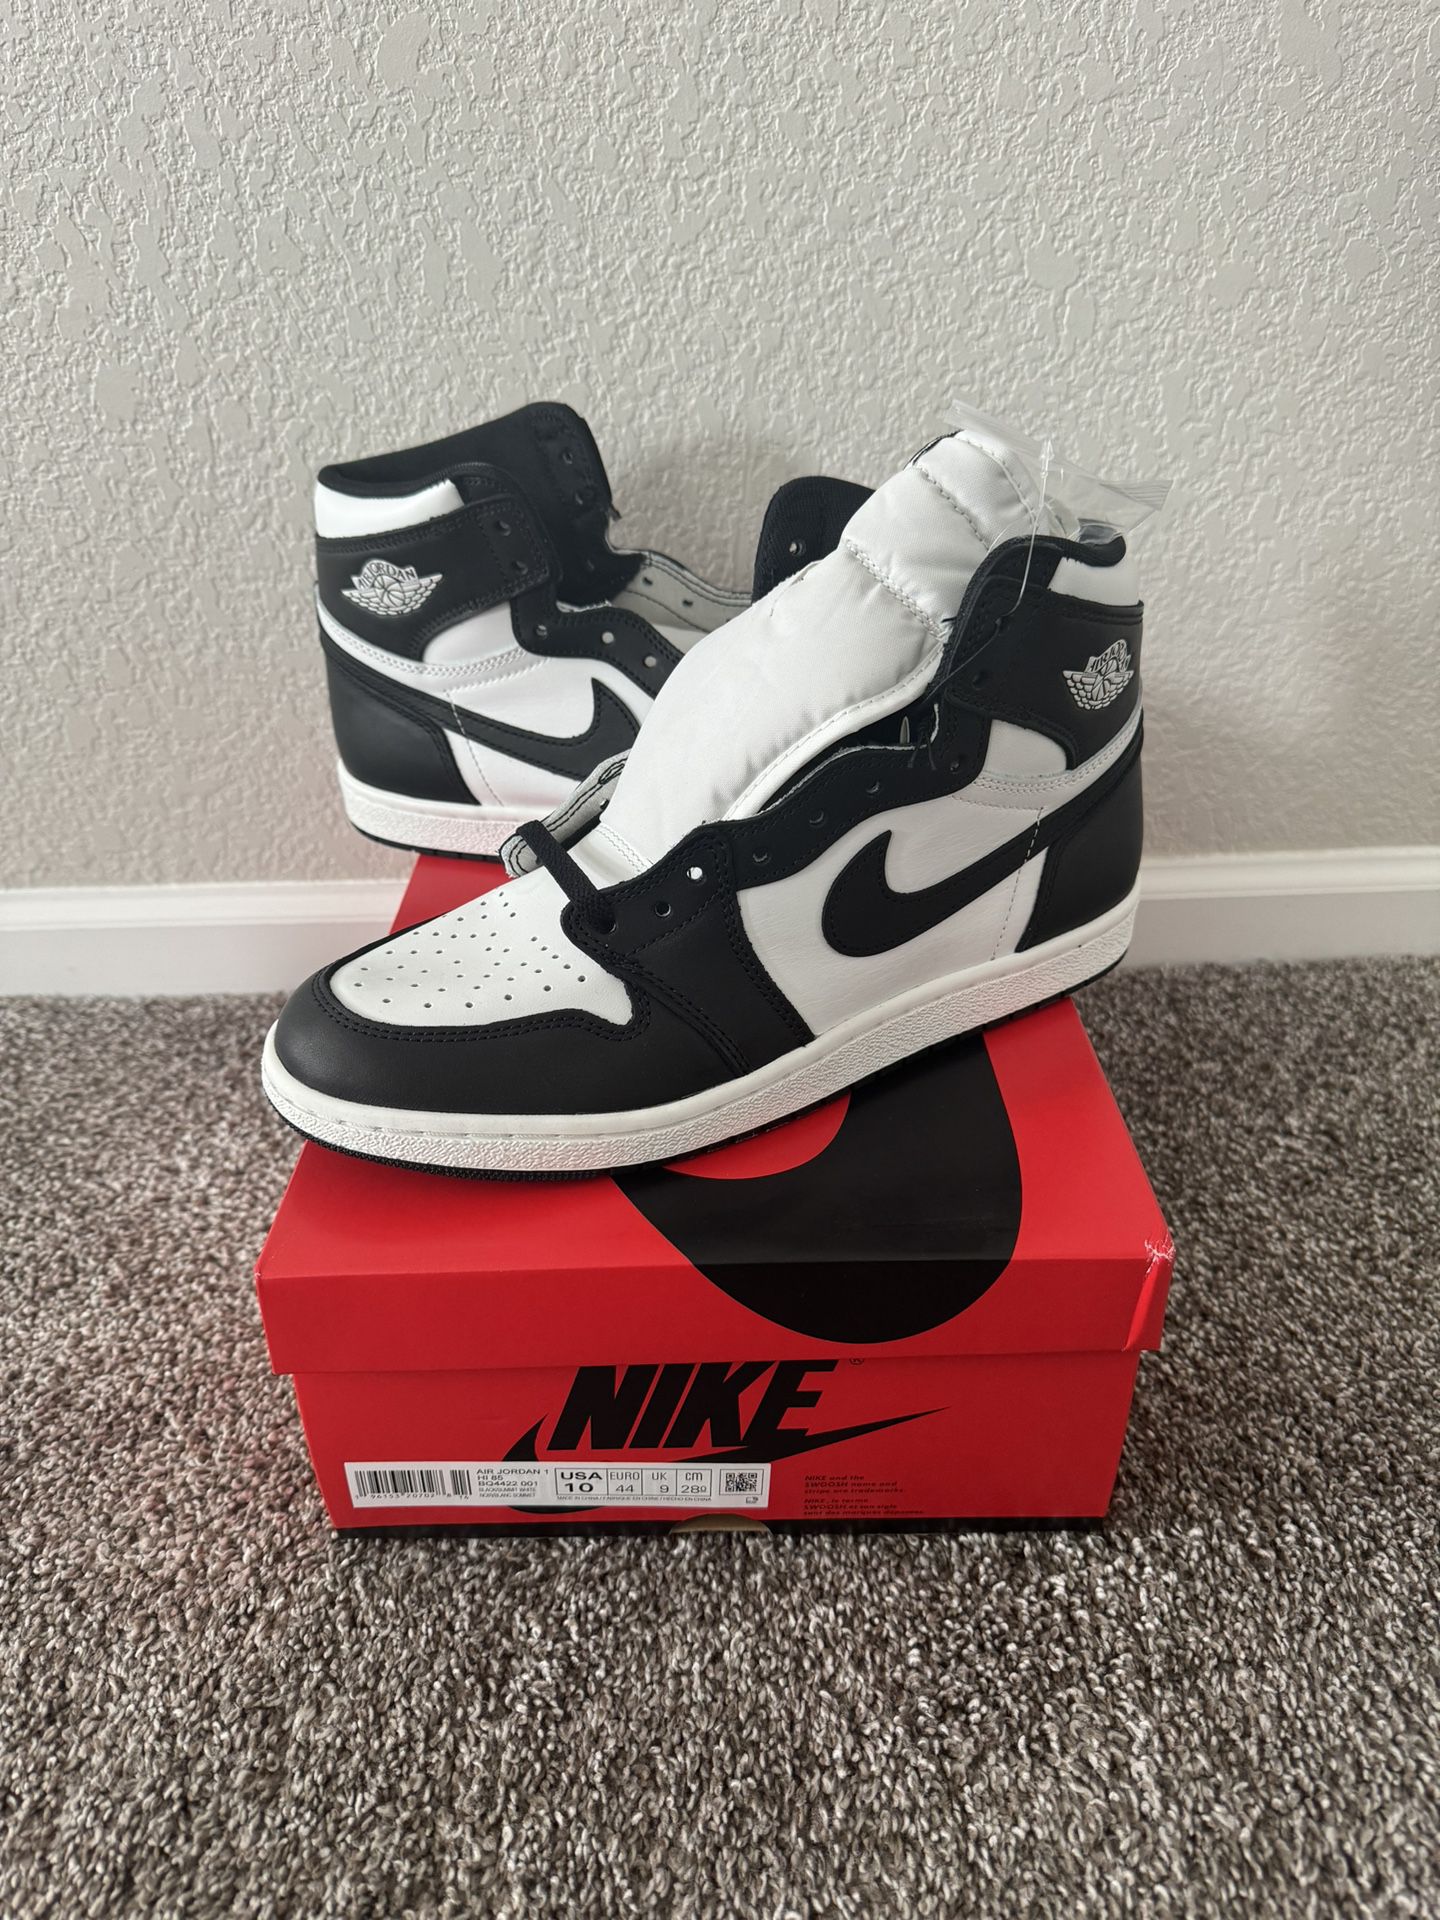 Nike Air Jordan 1 Black White ‘85 - Size 10